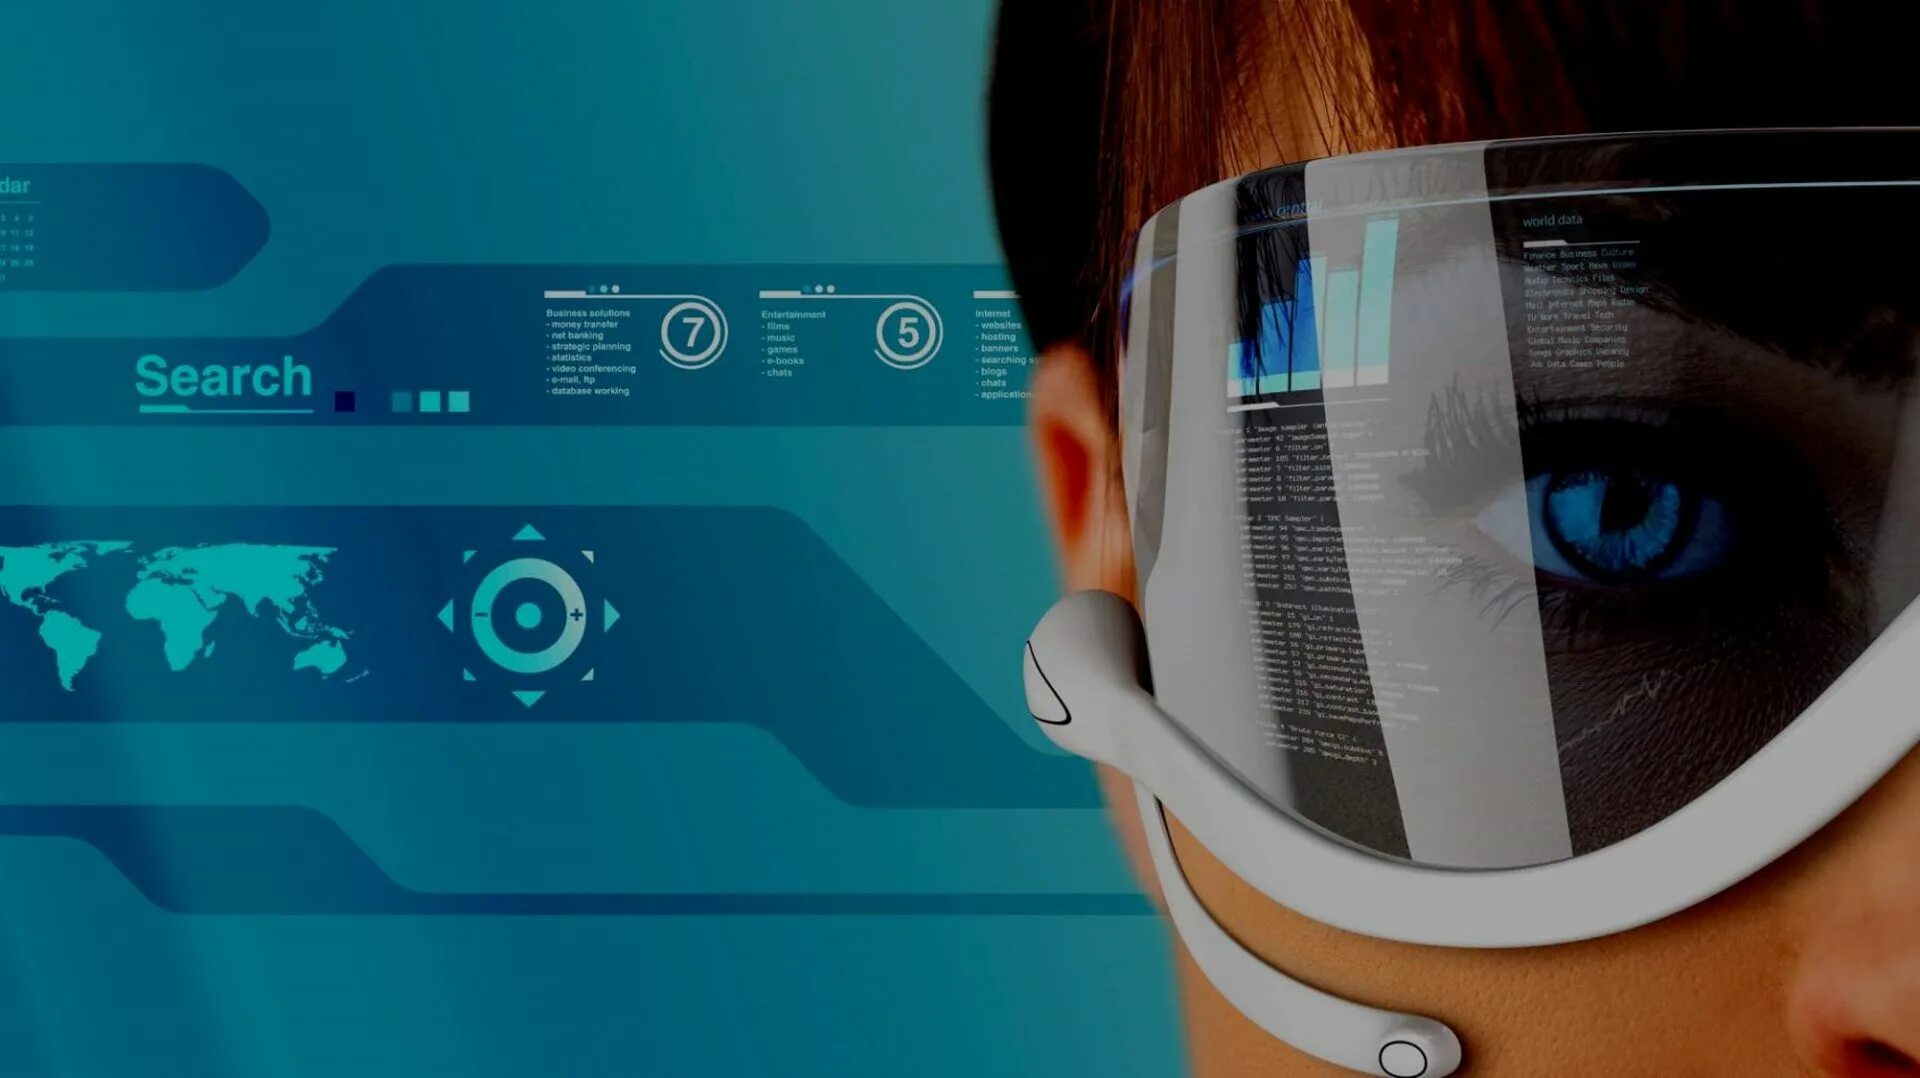 VR на базе интернет-технологий. Виртуальная реальность обои. Виртуальная реальность фон для презентации. VR технологии Эстетика.